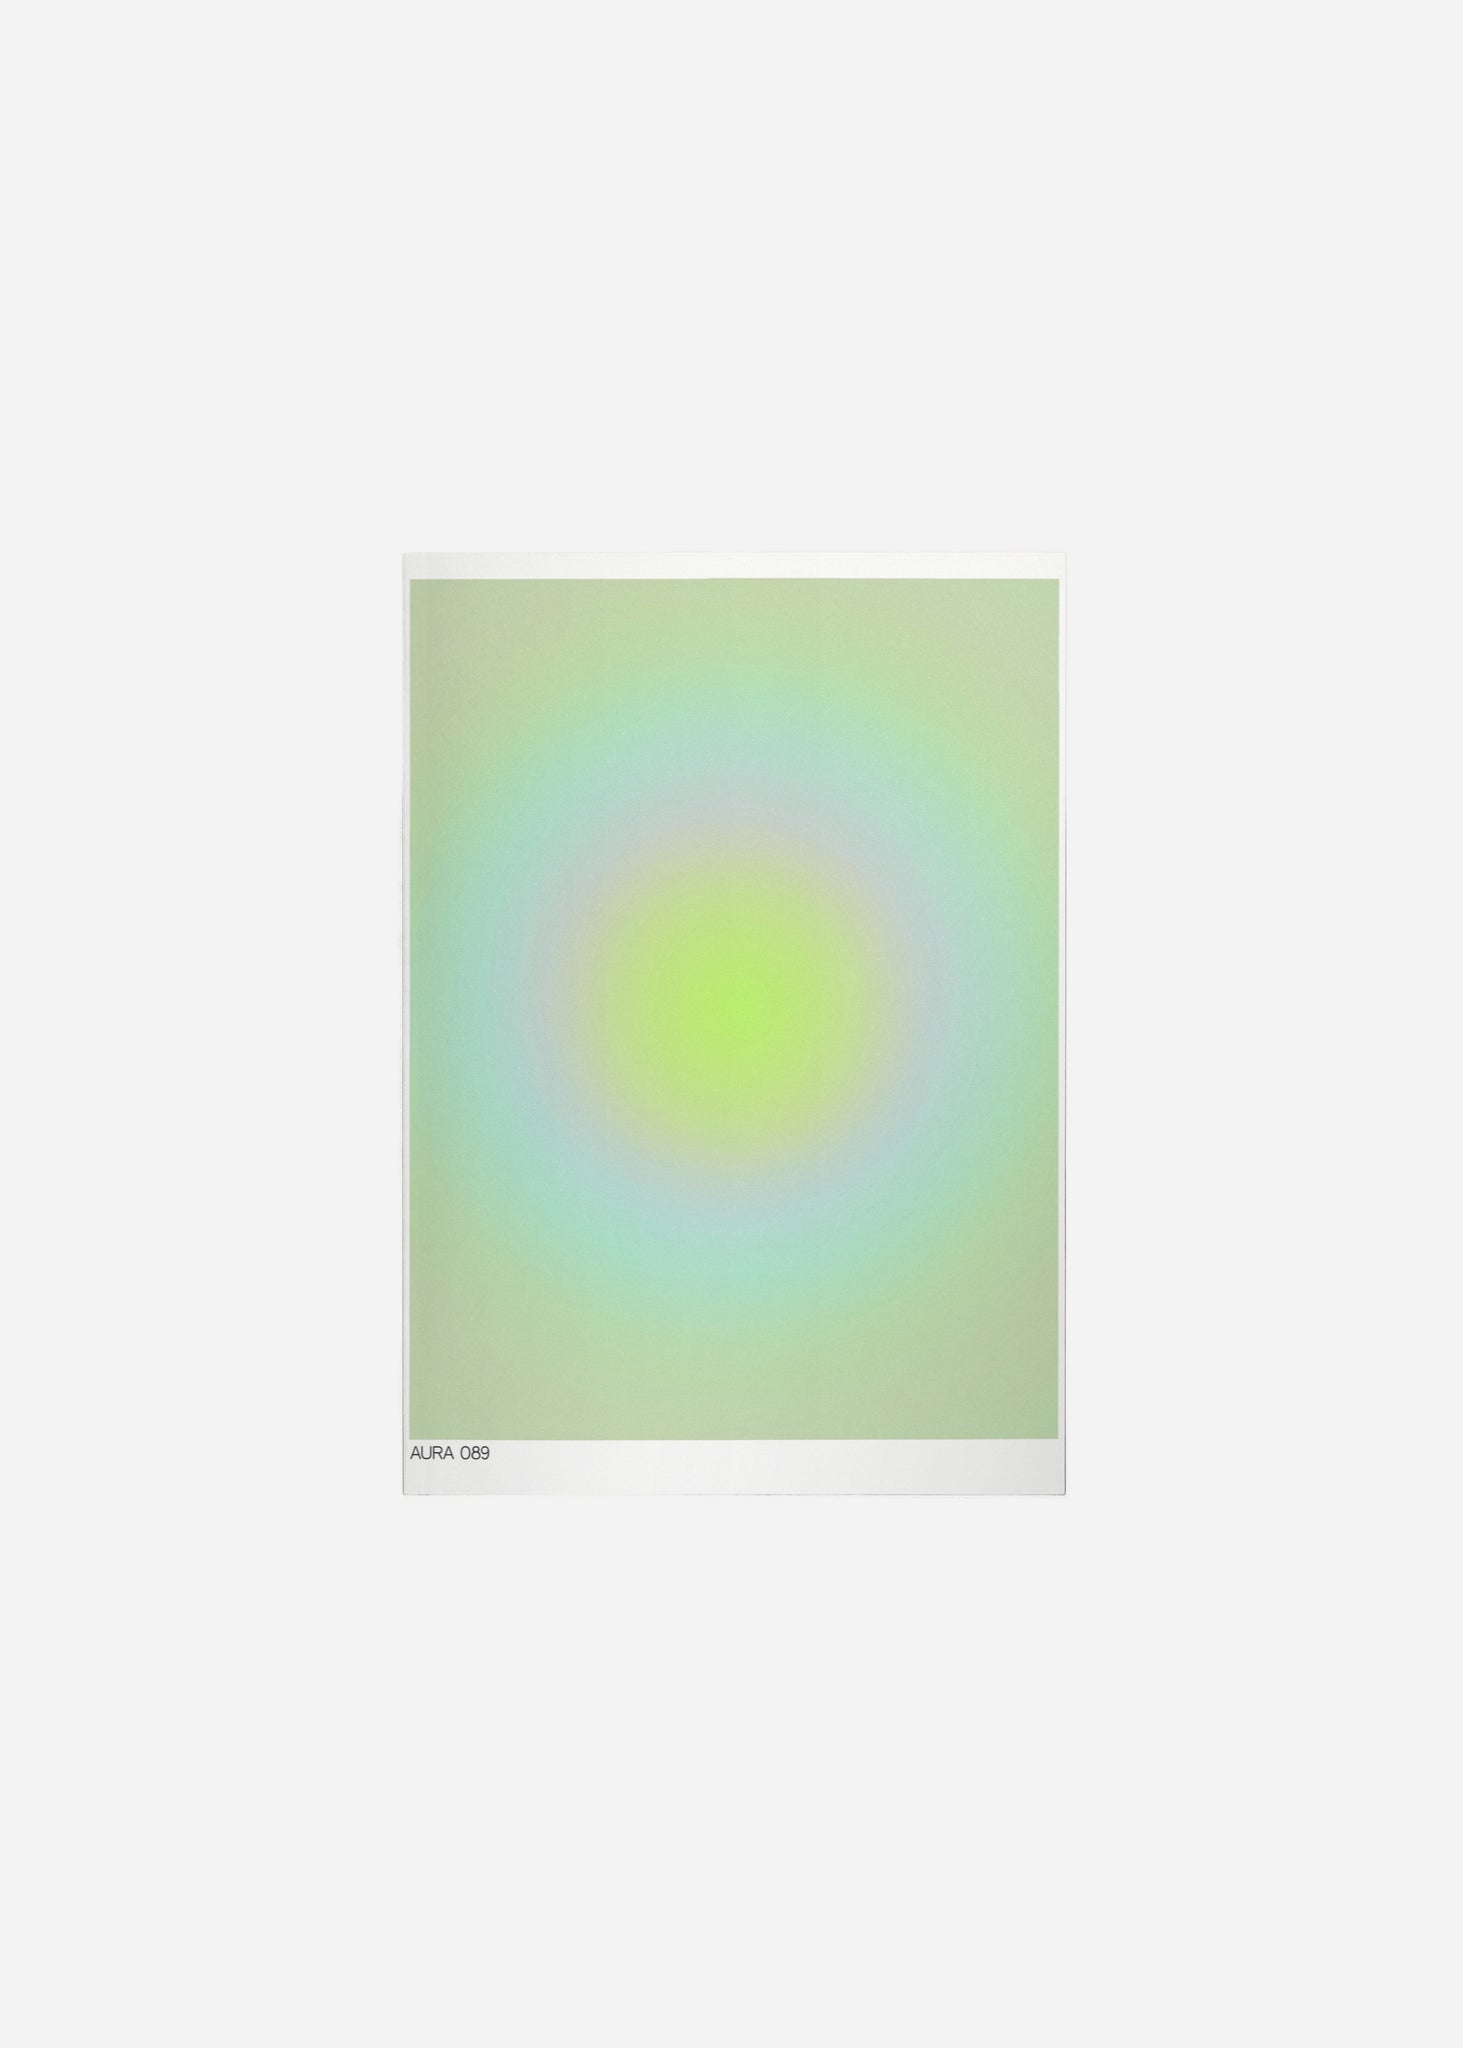 aura 089 Fine Art Print